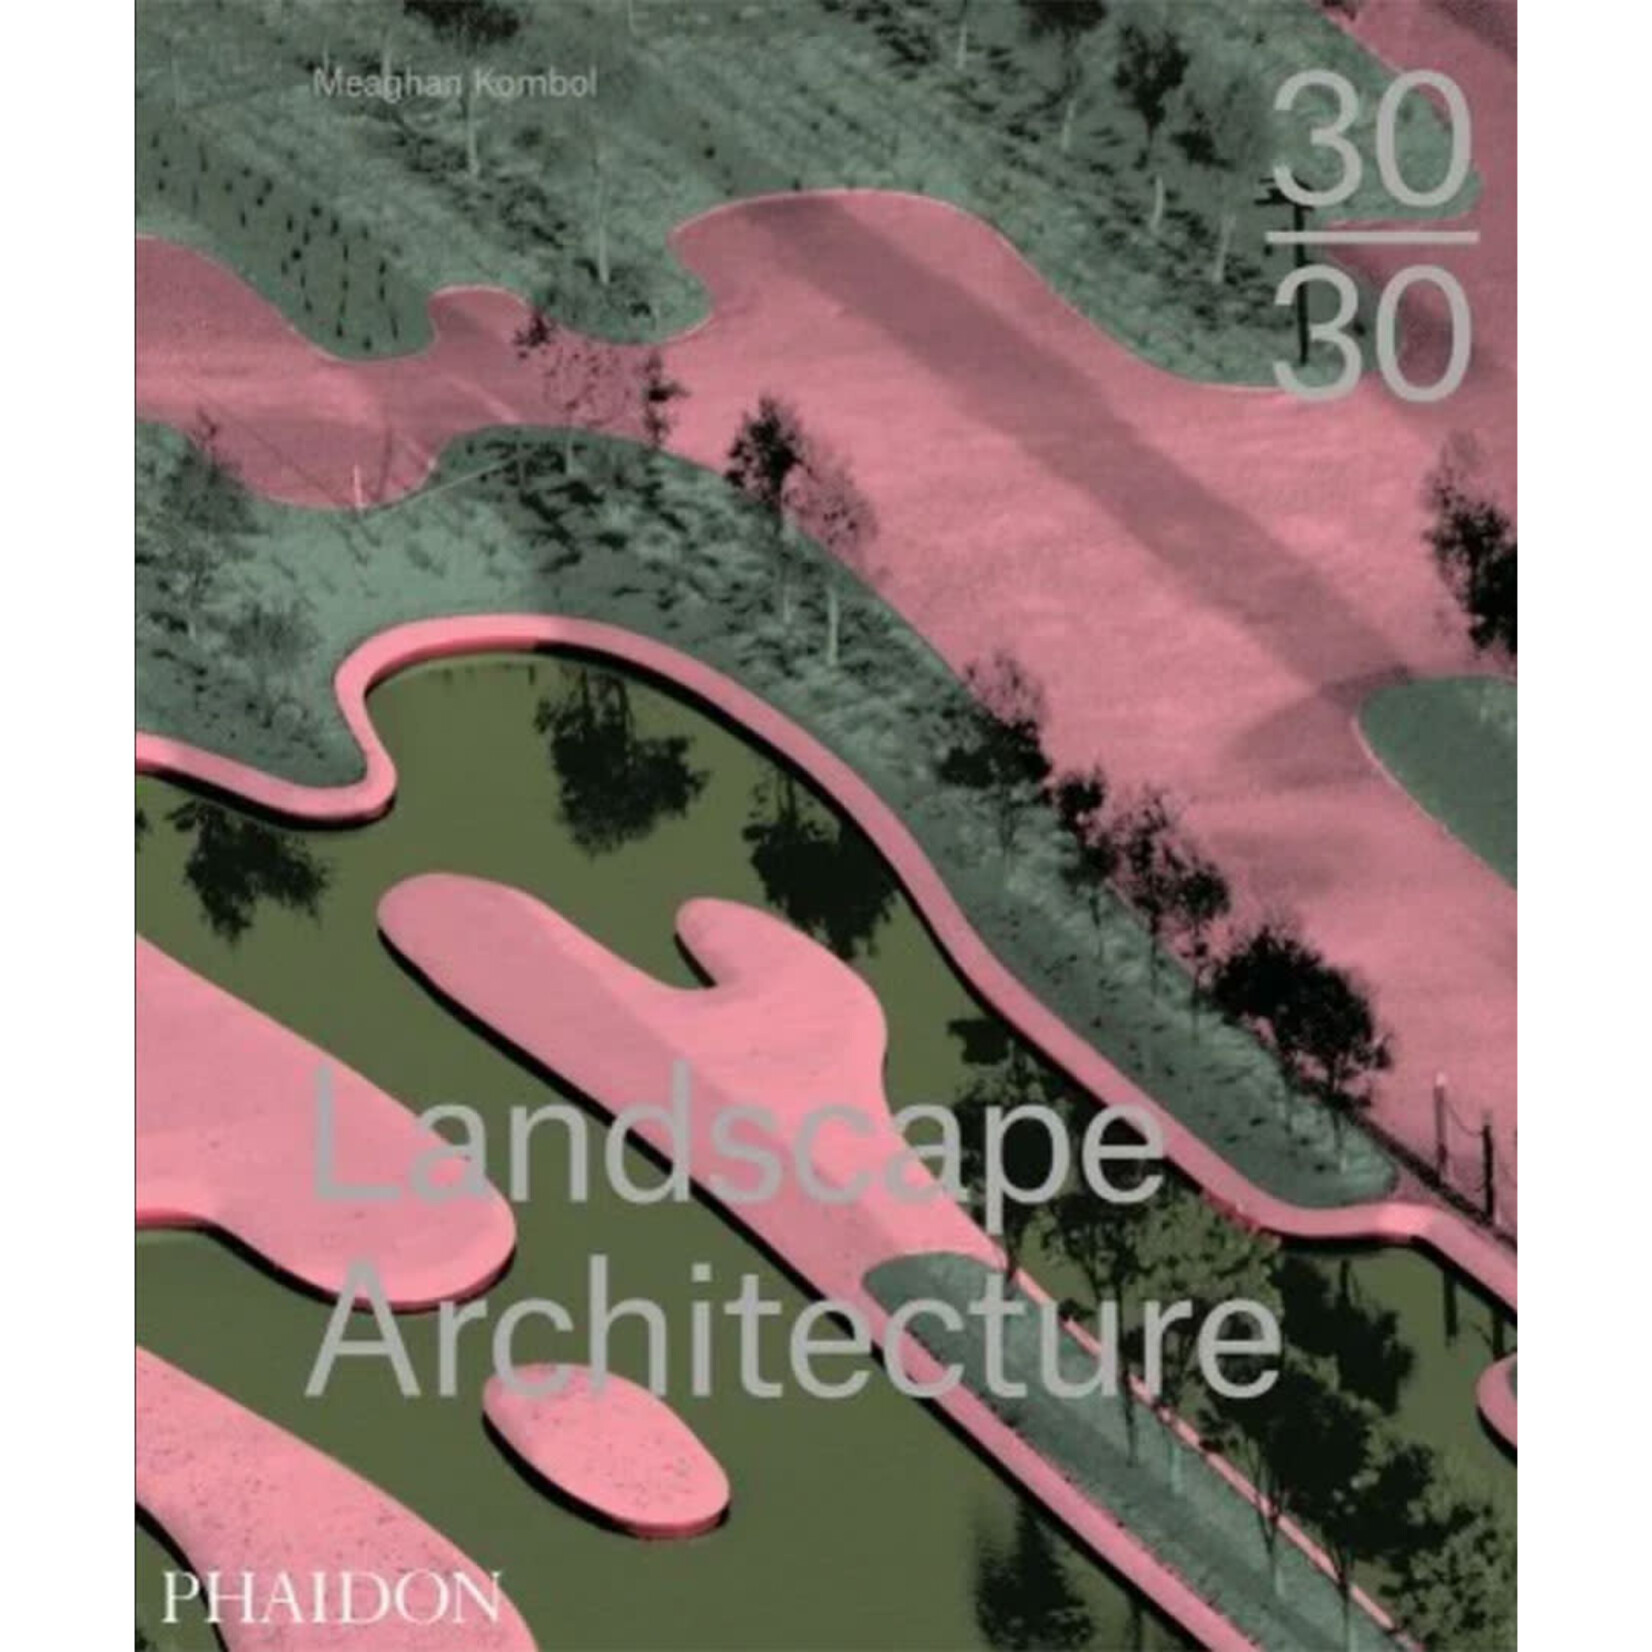 30:30 Landscape Architecture